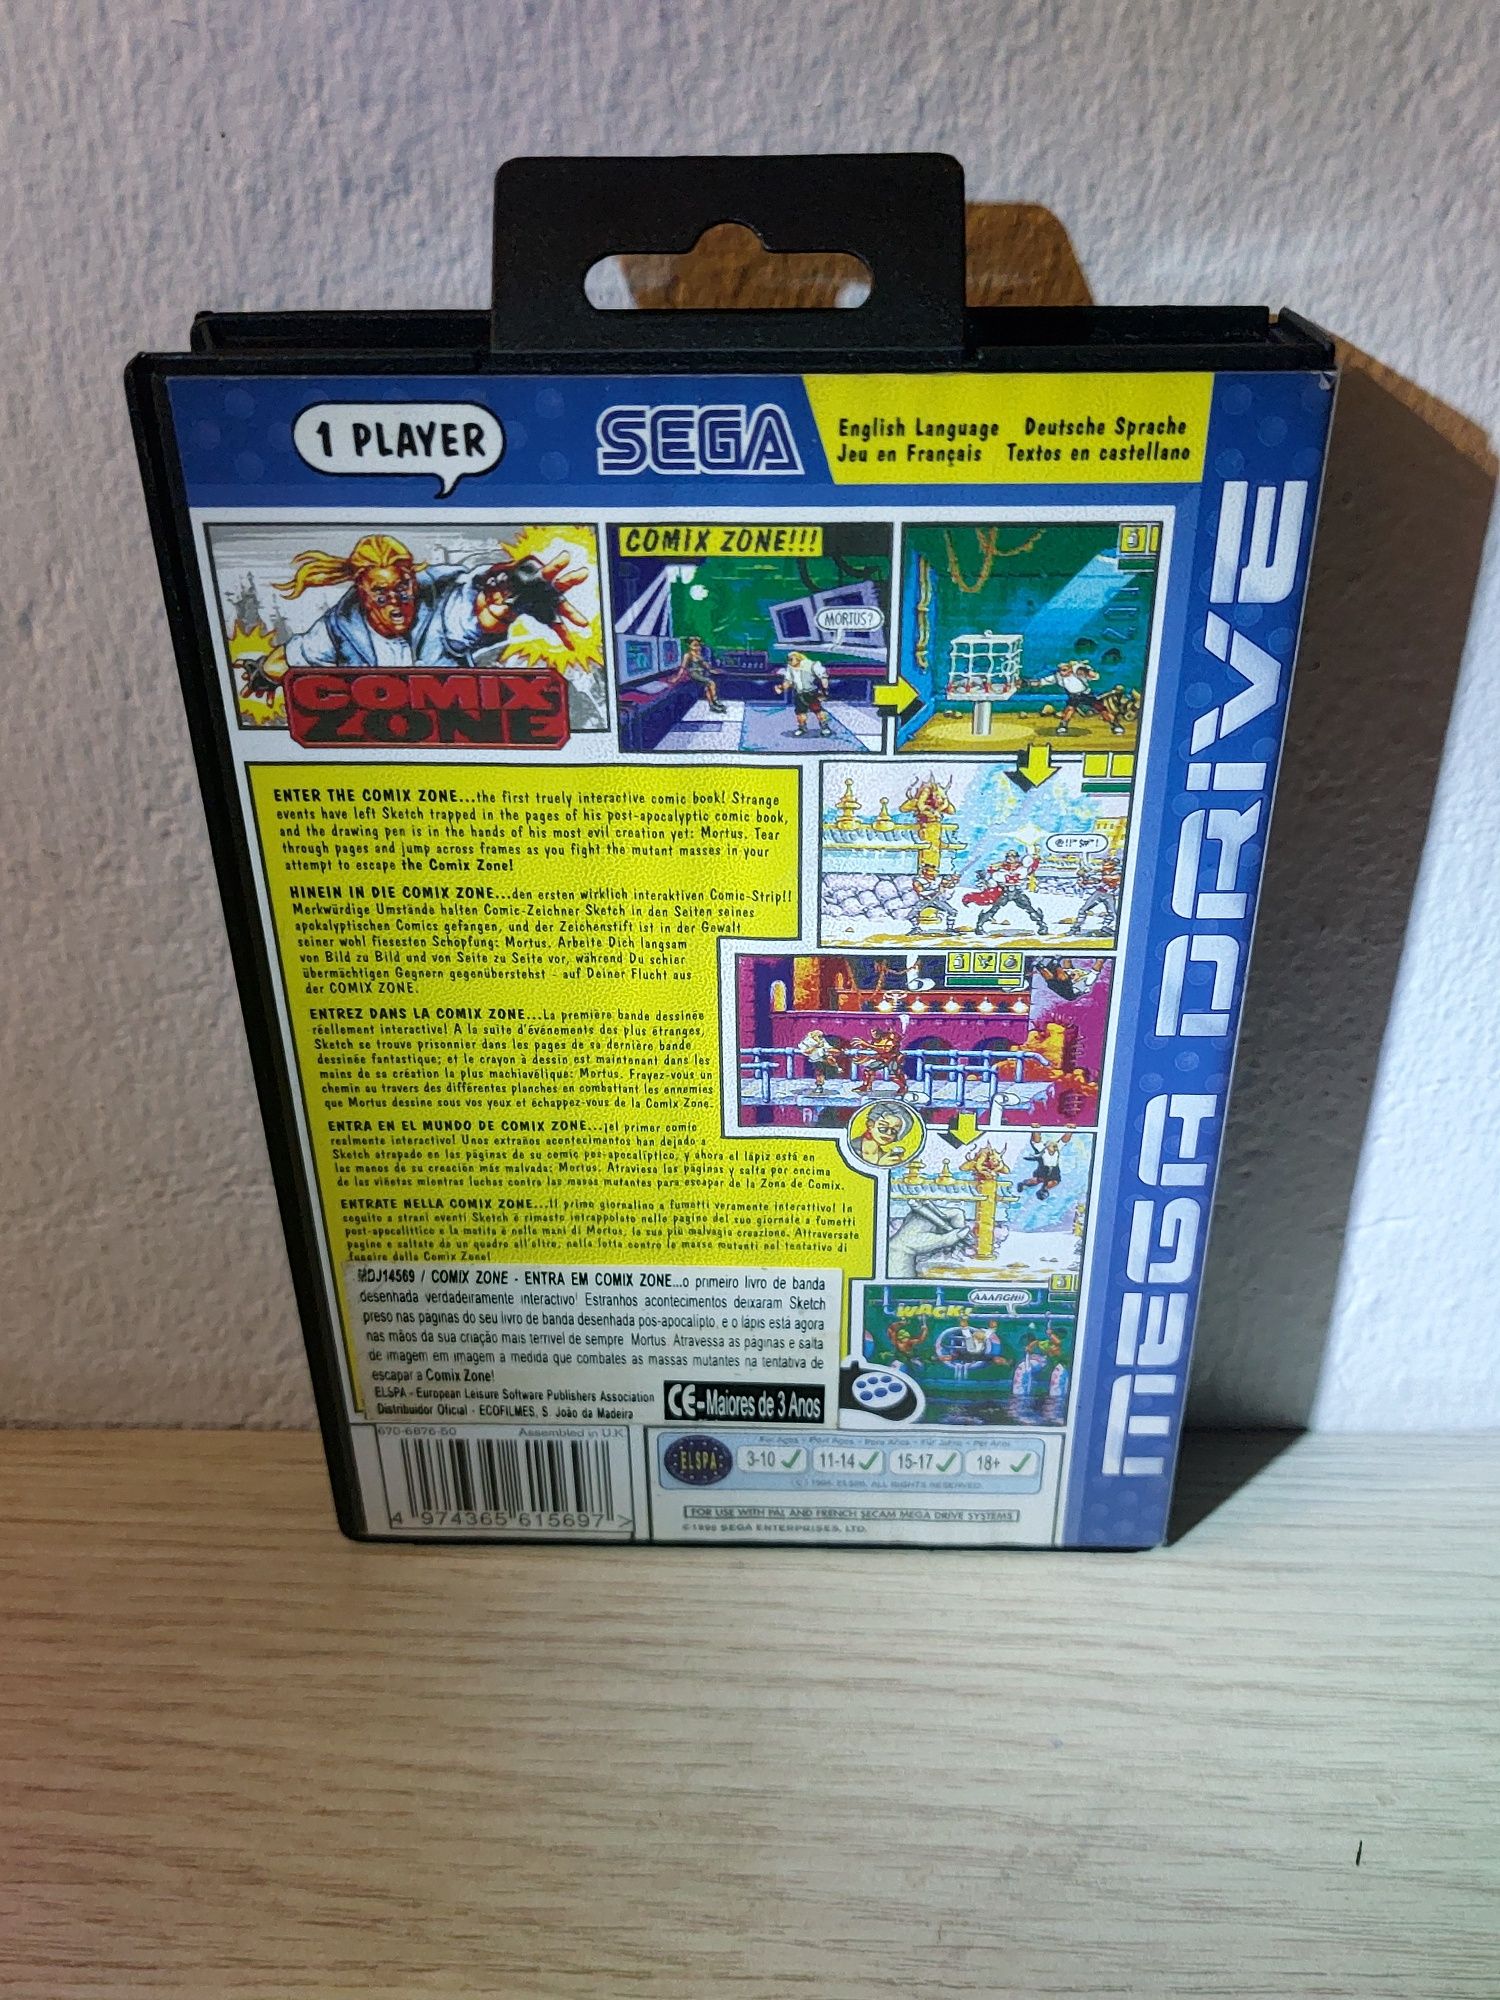 Comix Zone (Sega Mega Drive)